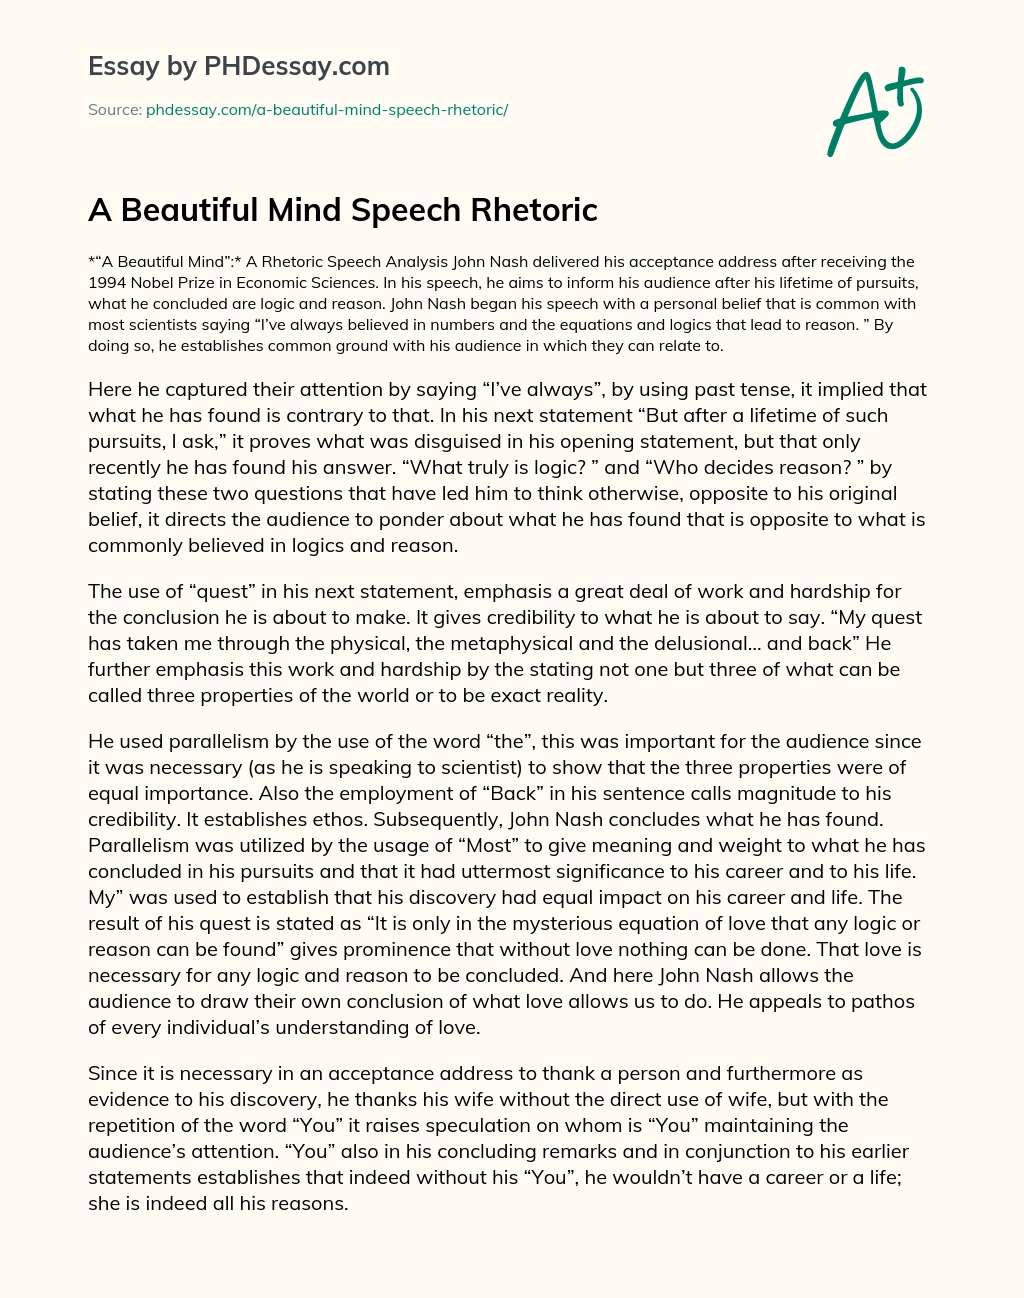 A Beautiful Mind Speech Rhetoric essay